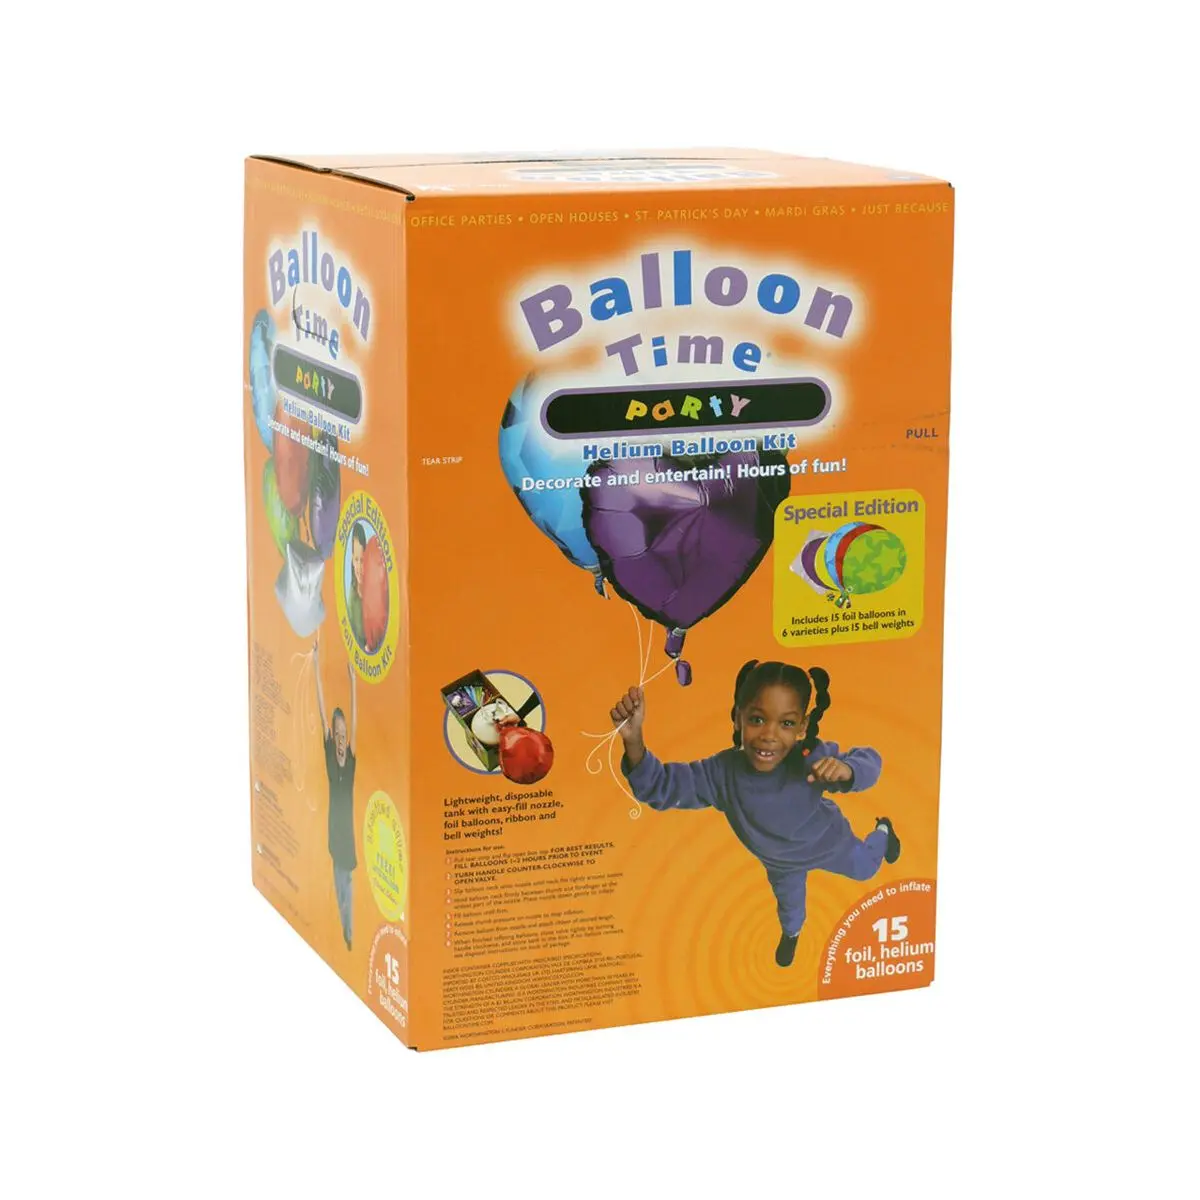 Balónová súprava s héliom na párty